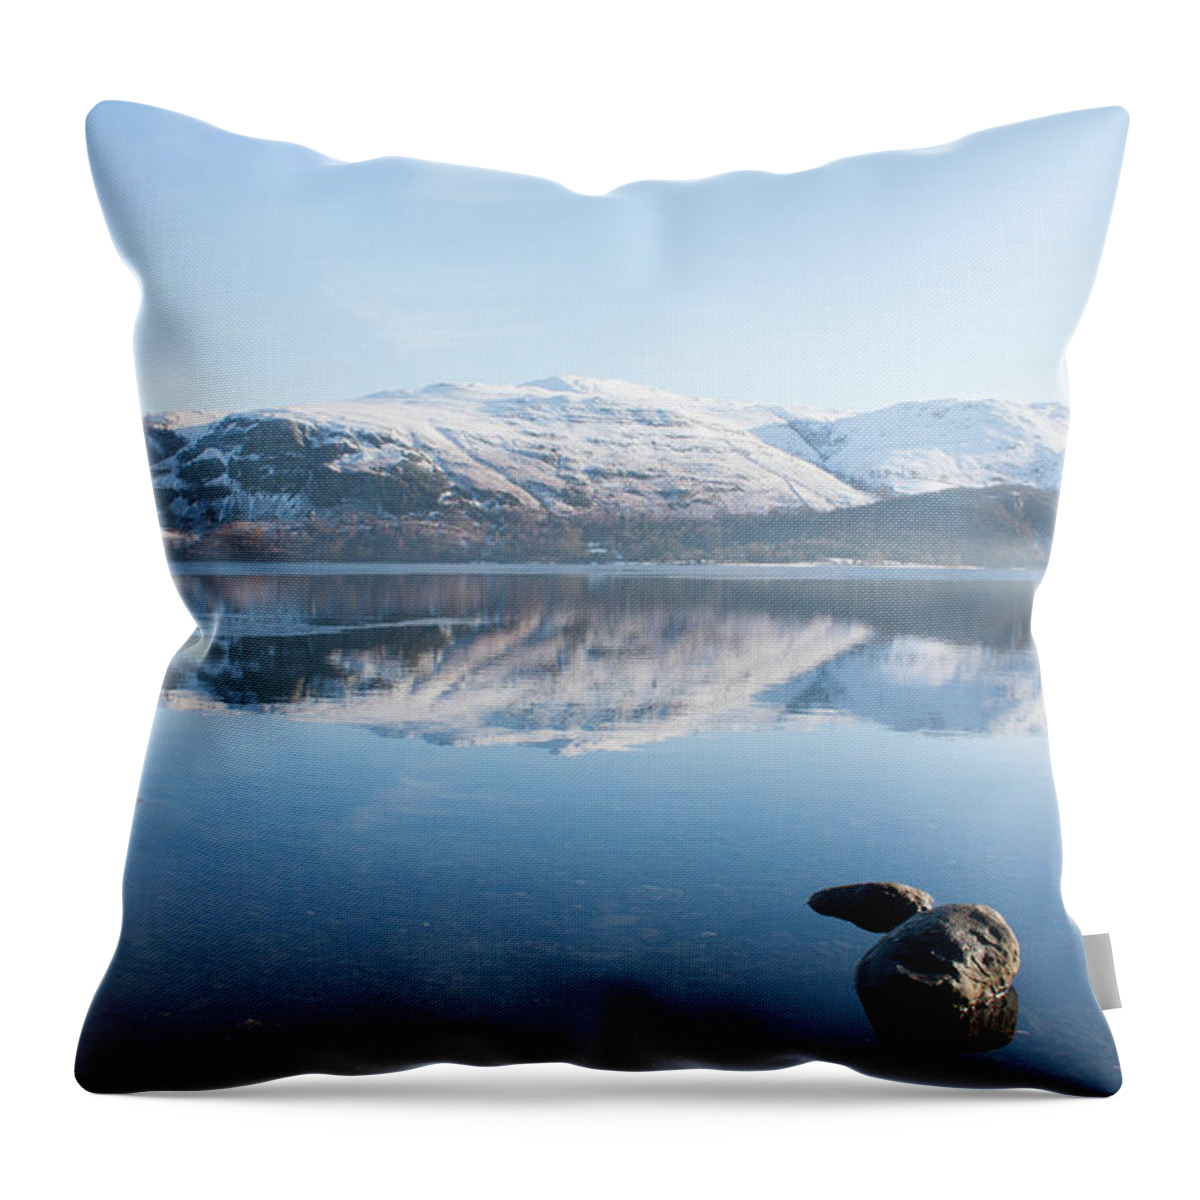 Landscape Throw Pillow featuring the photograph Derwentwater Rocks by Pete Walkden